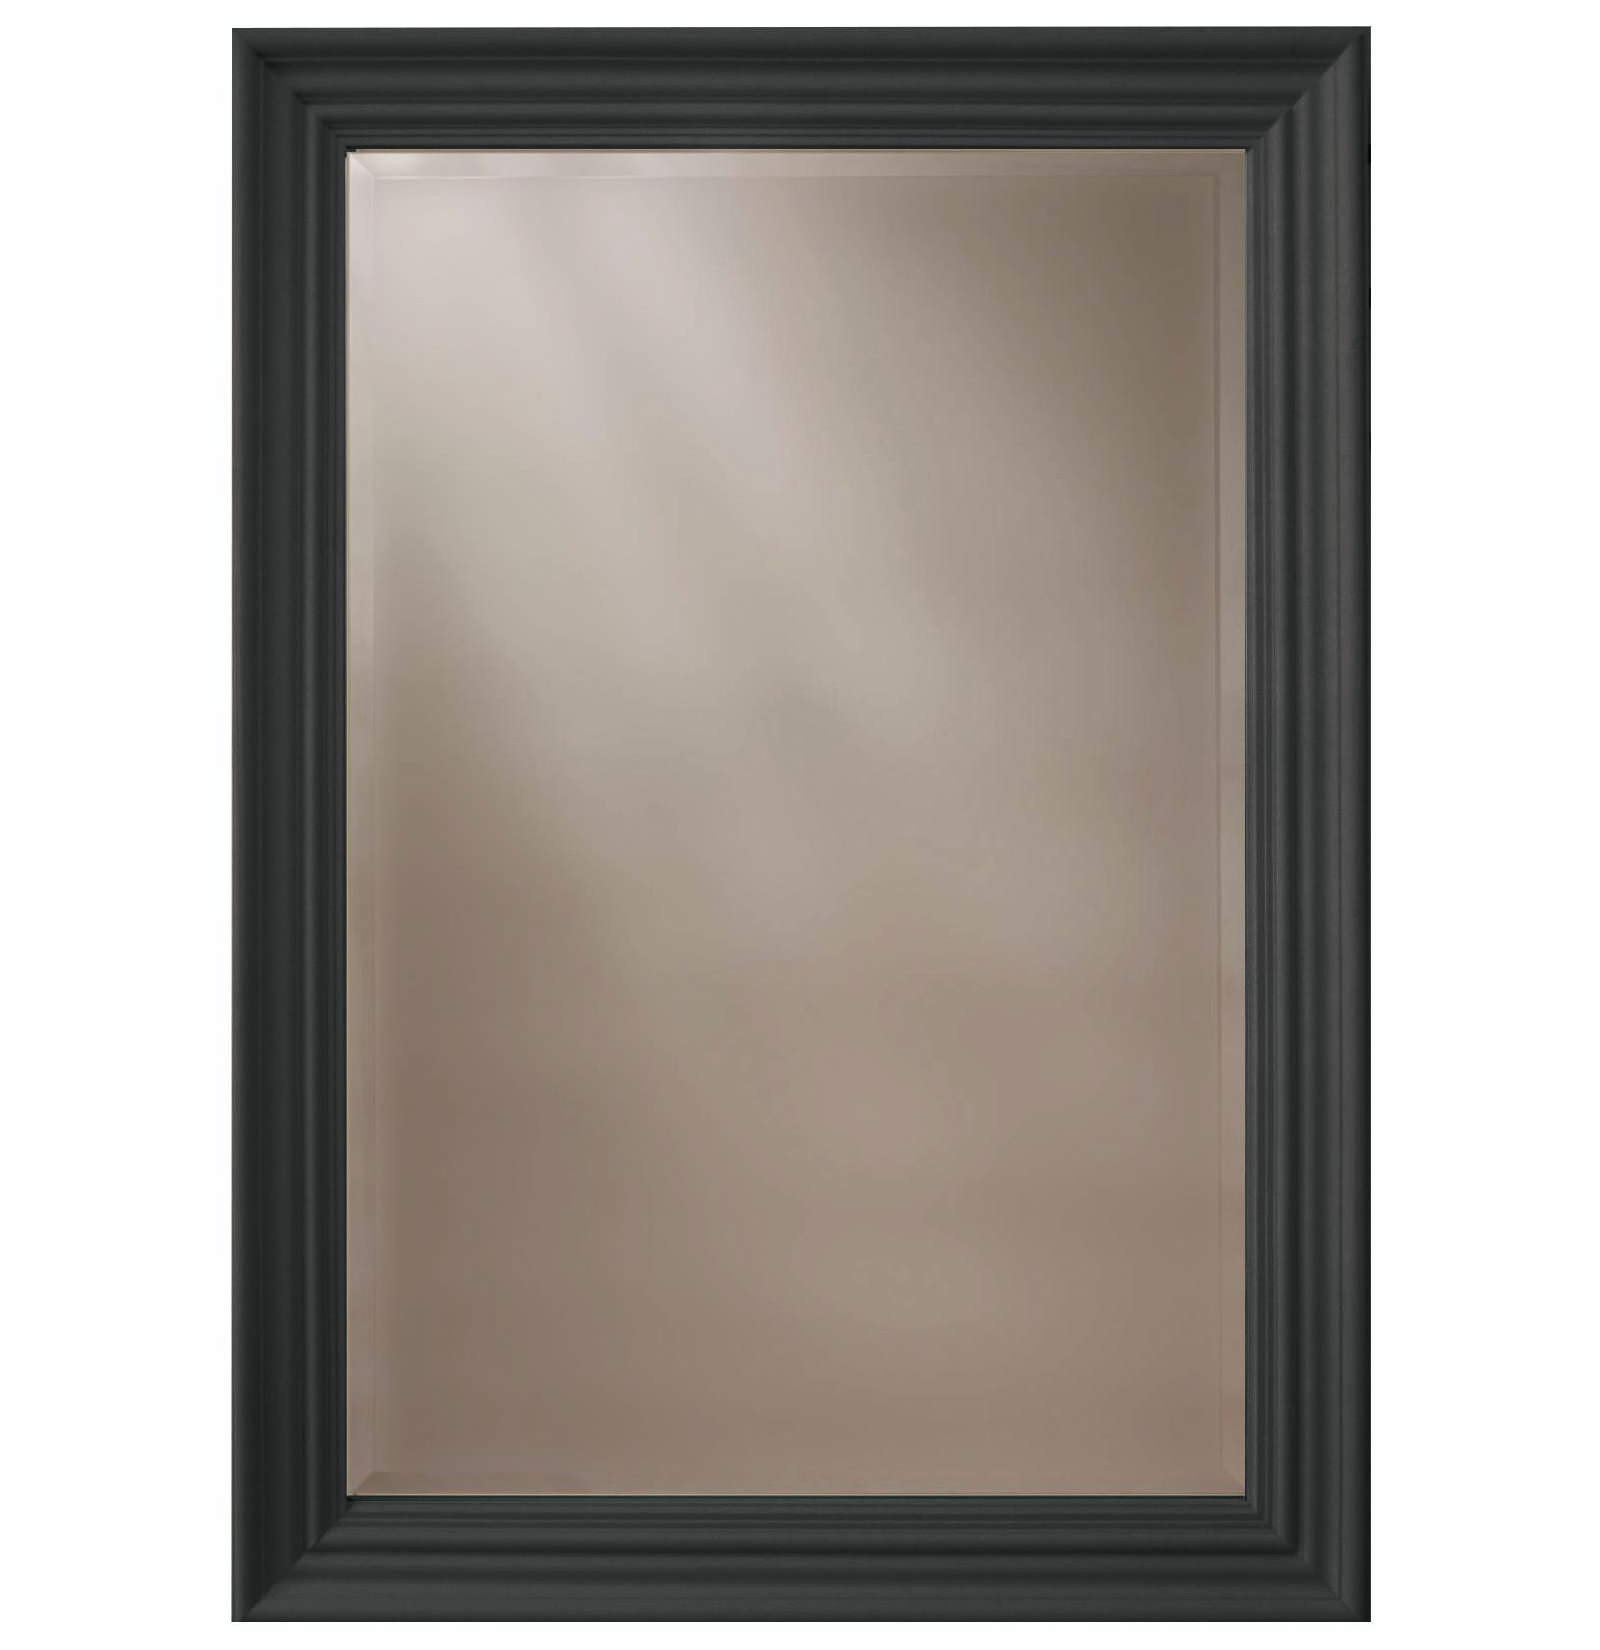 Black Framed Bathroom Mirror
 Heritage Edgeware yx Black Wooden Framed Mirror 660 x 910mm